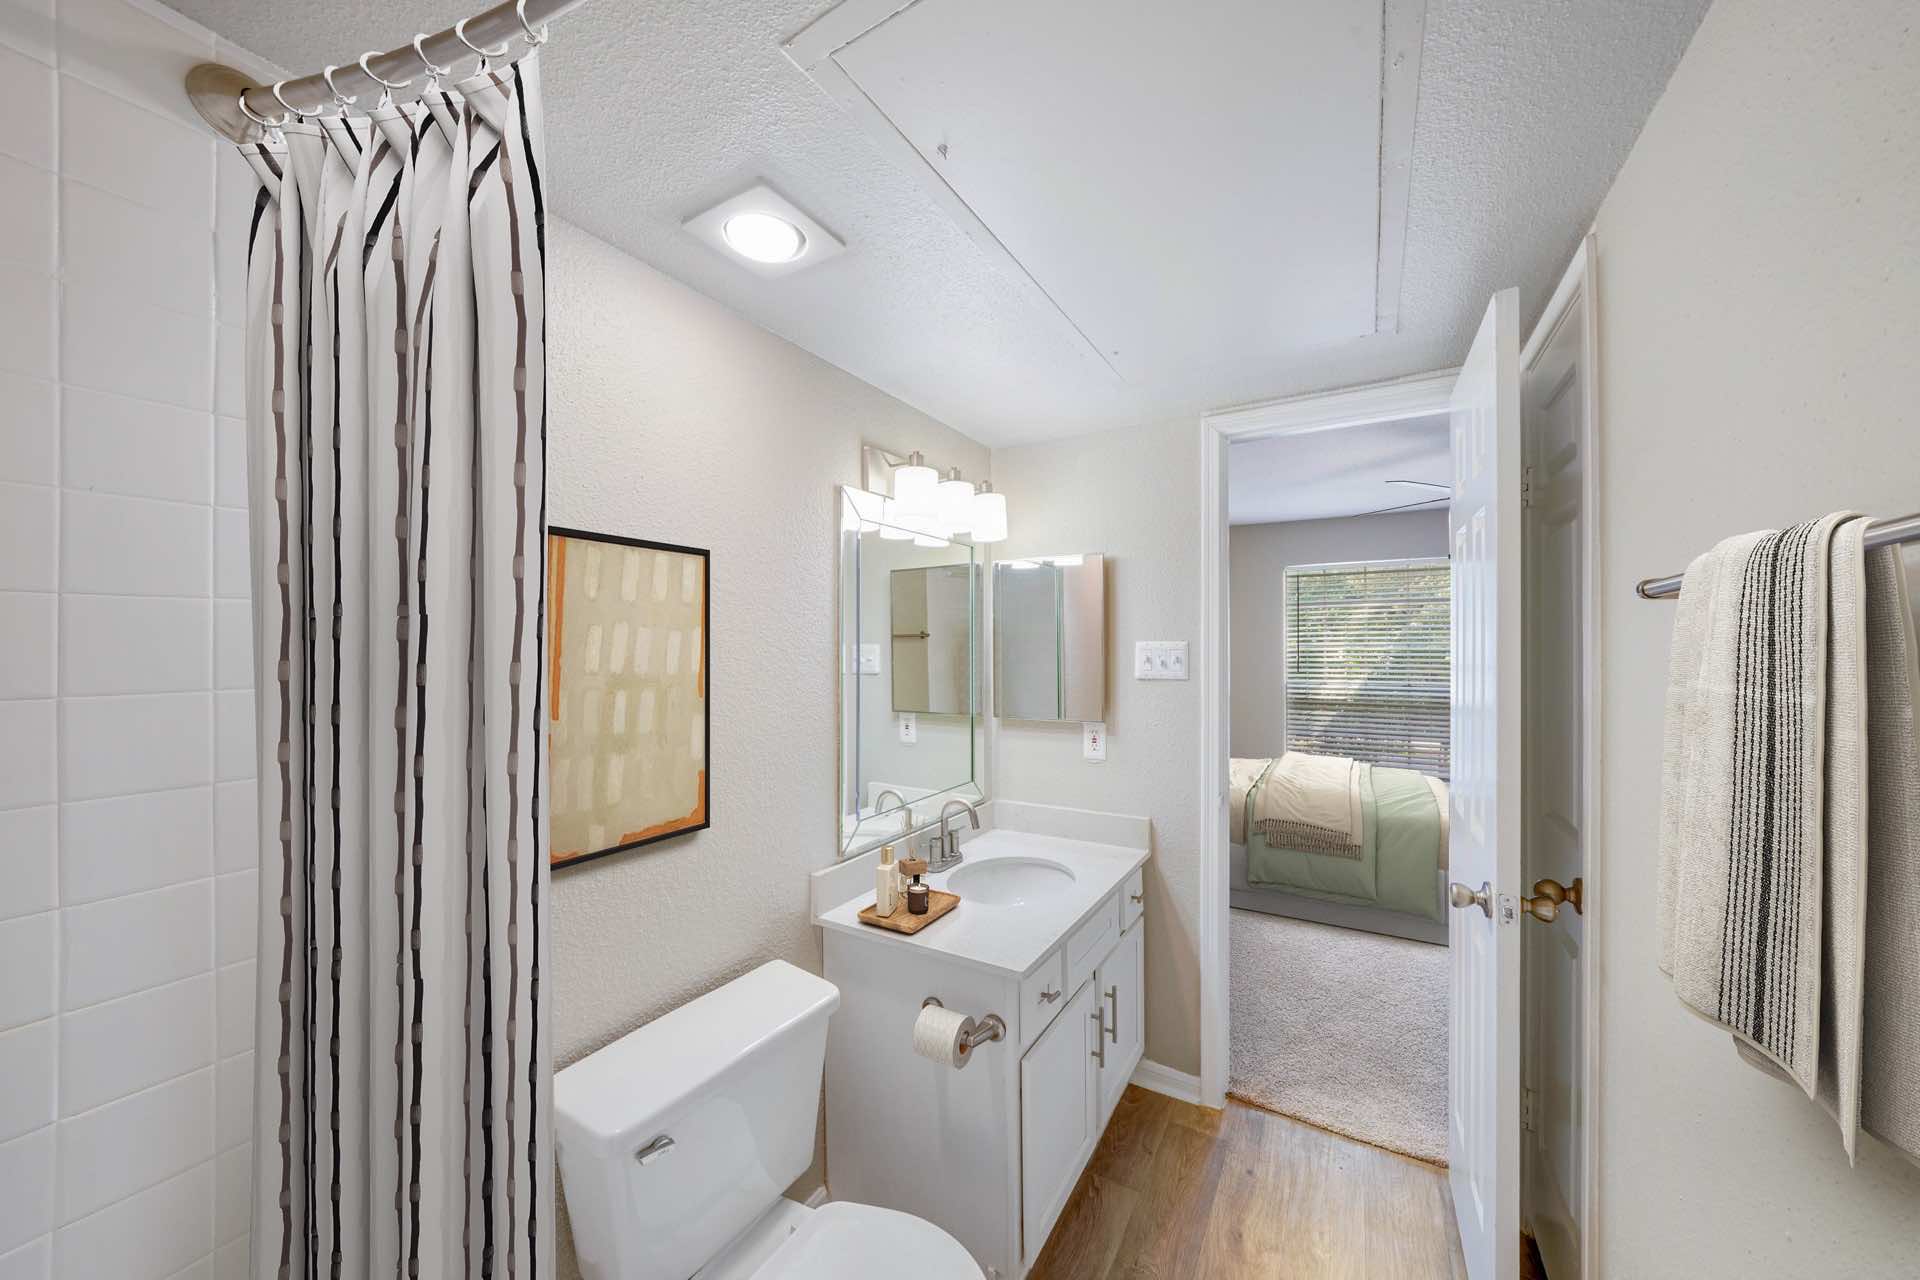 wood-style flooring and ample lighting in bathroom